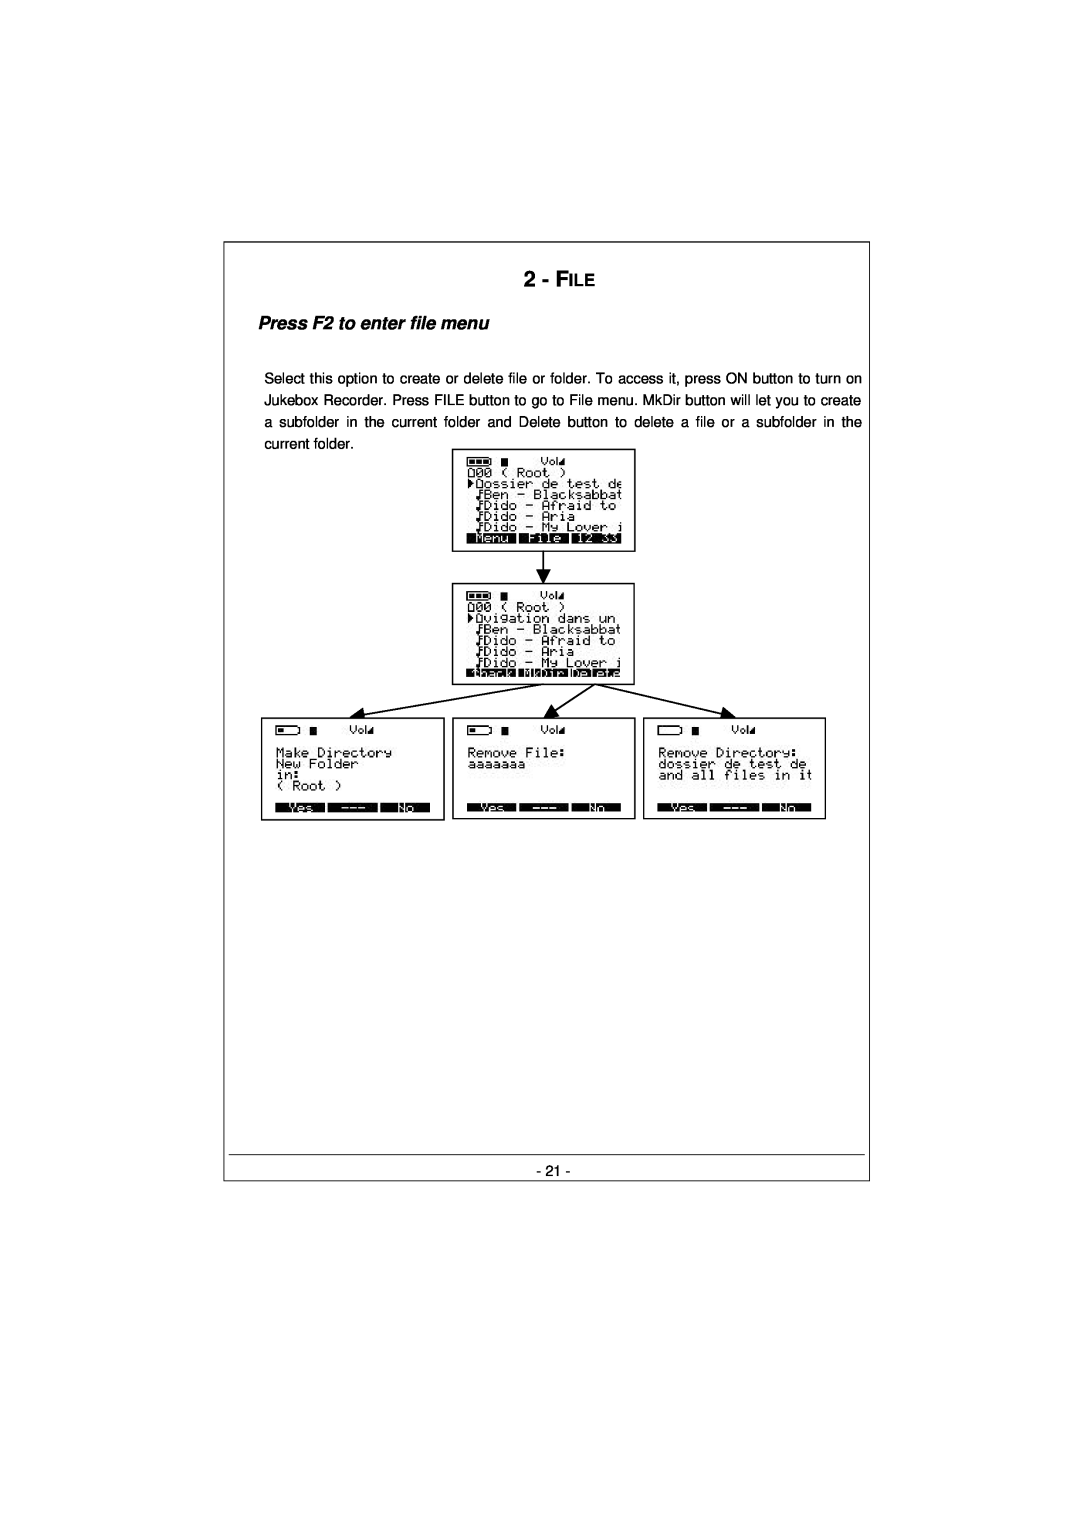 Archos 100628 manual File, Press F2 to enter file menu 